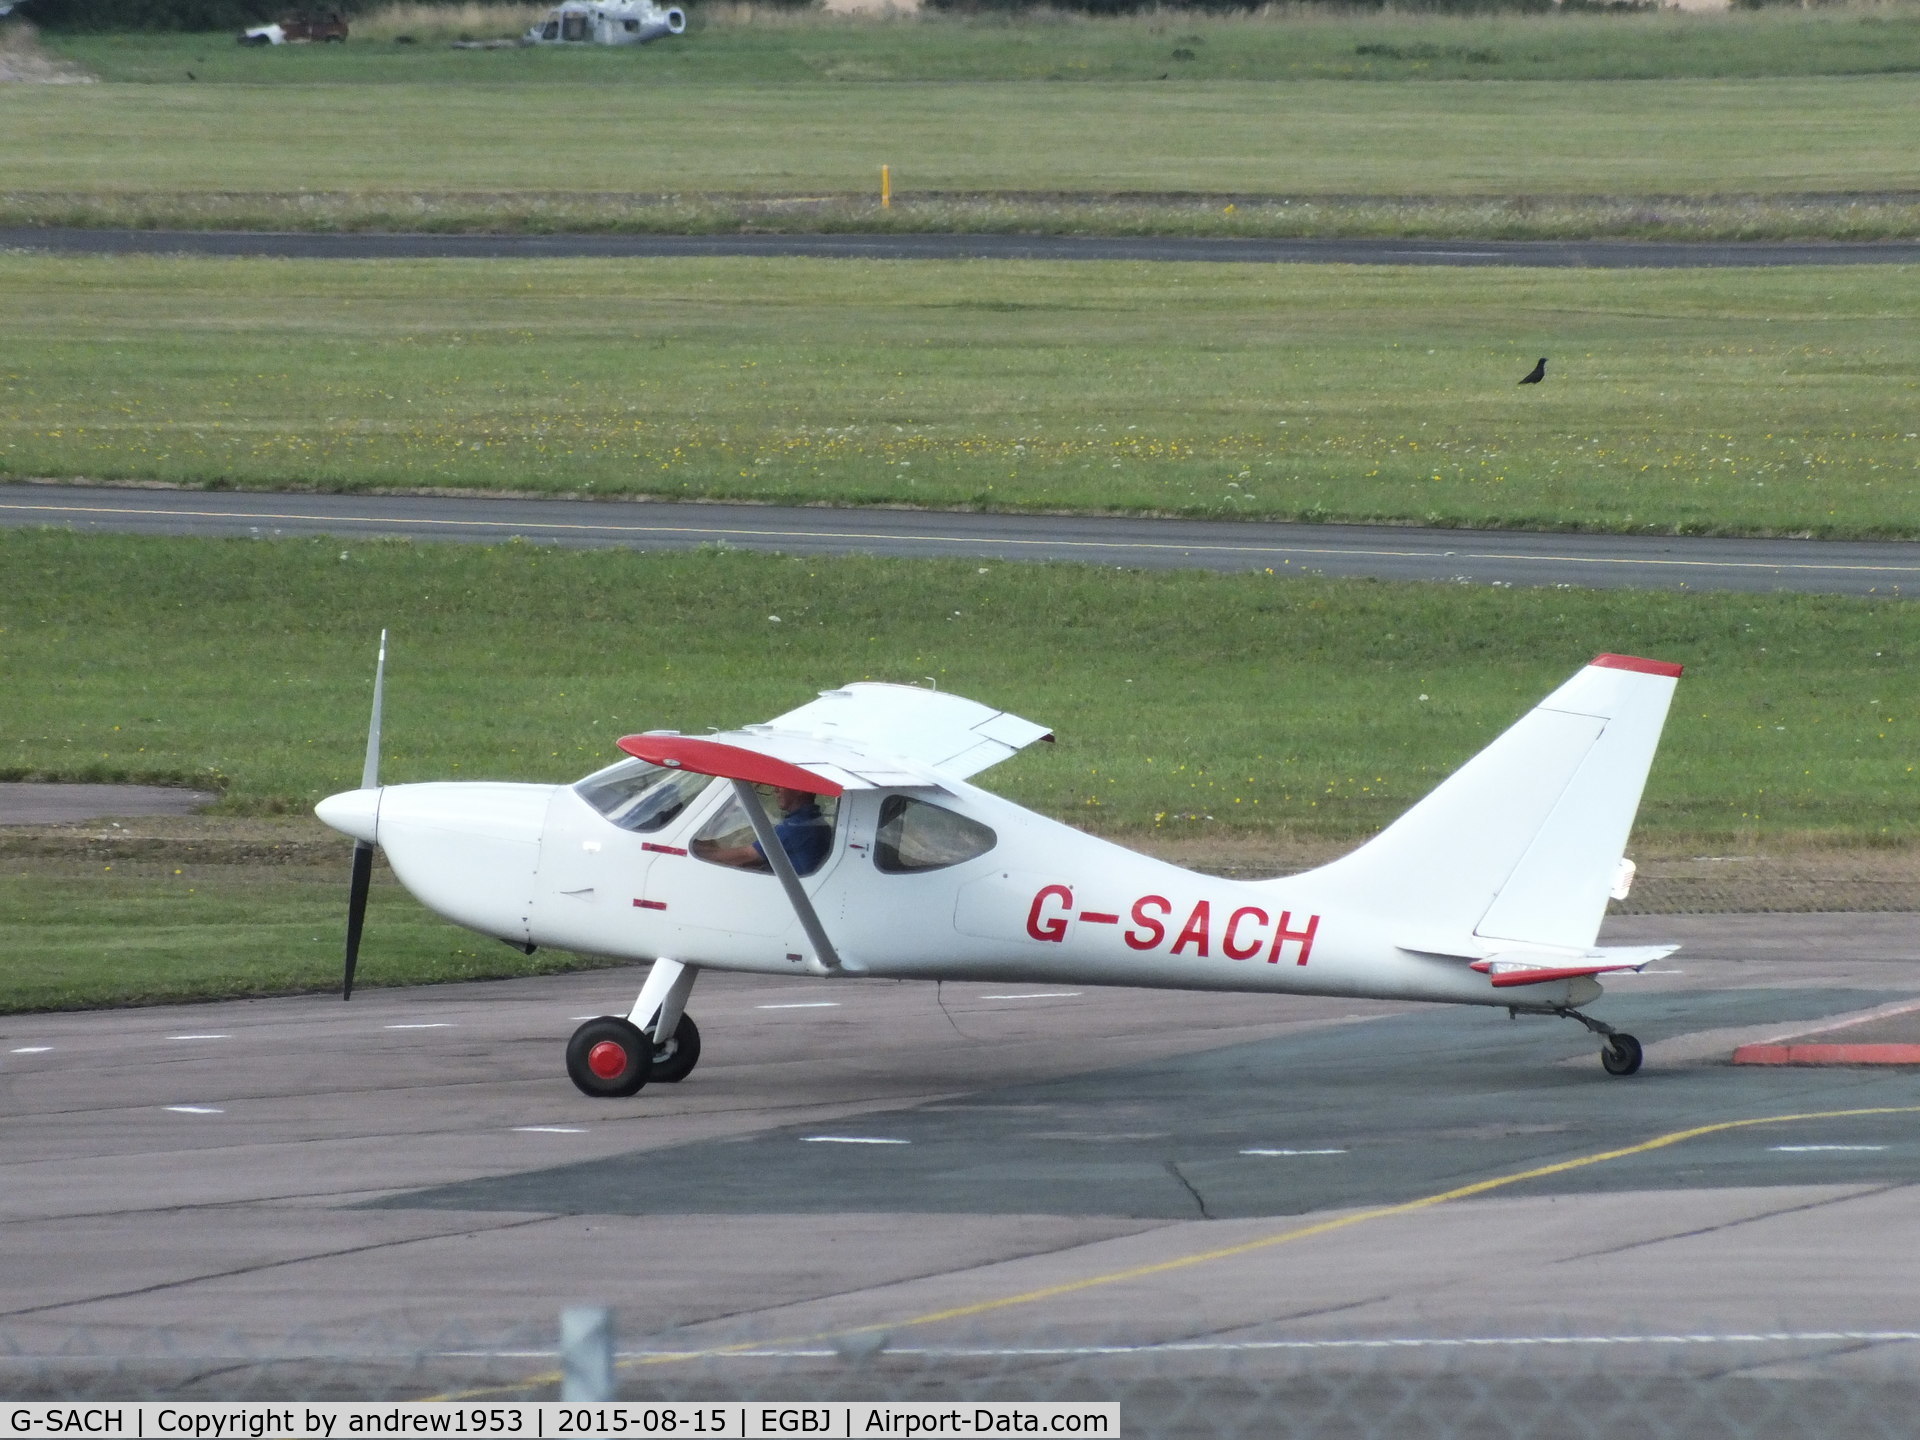 G-SACH, 2002 Stoddard-Hamilton Glastar C/N PFA 295-13088, G-SACH at Gloucestershire Airport.